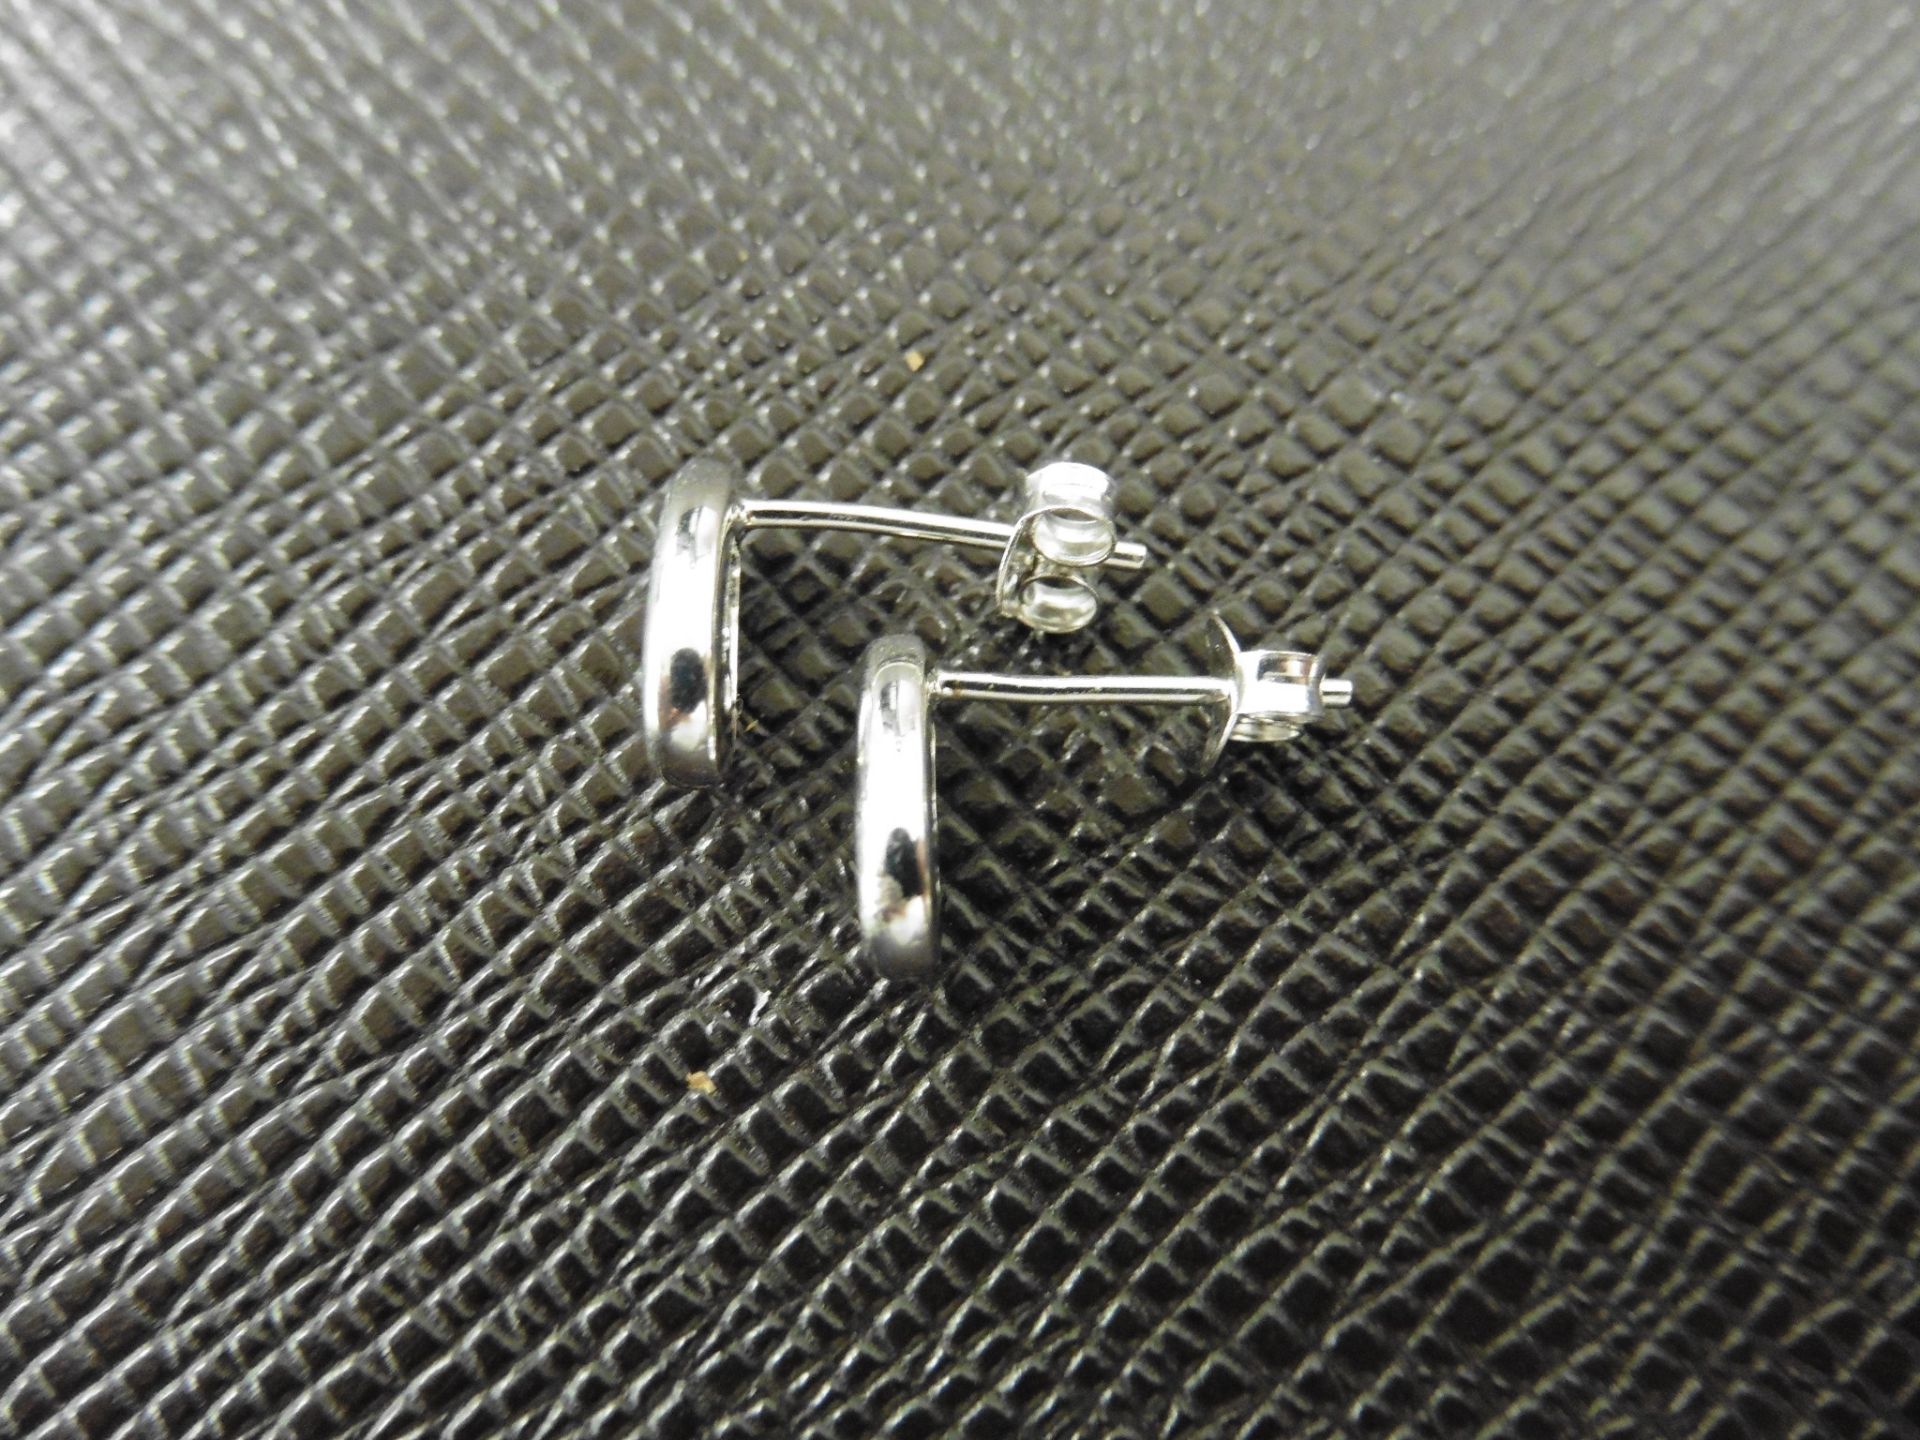 0.20ct diamond earrings set in platinum 950. 2 small brilliant cut diamonds, H/I colourand si2 - Image 3 of 3